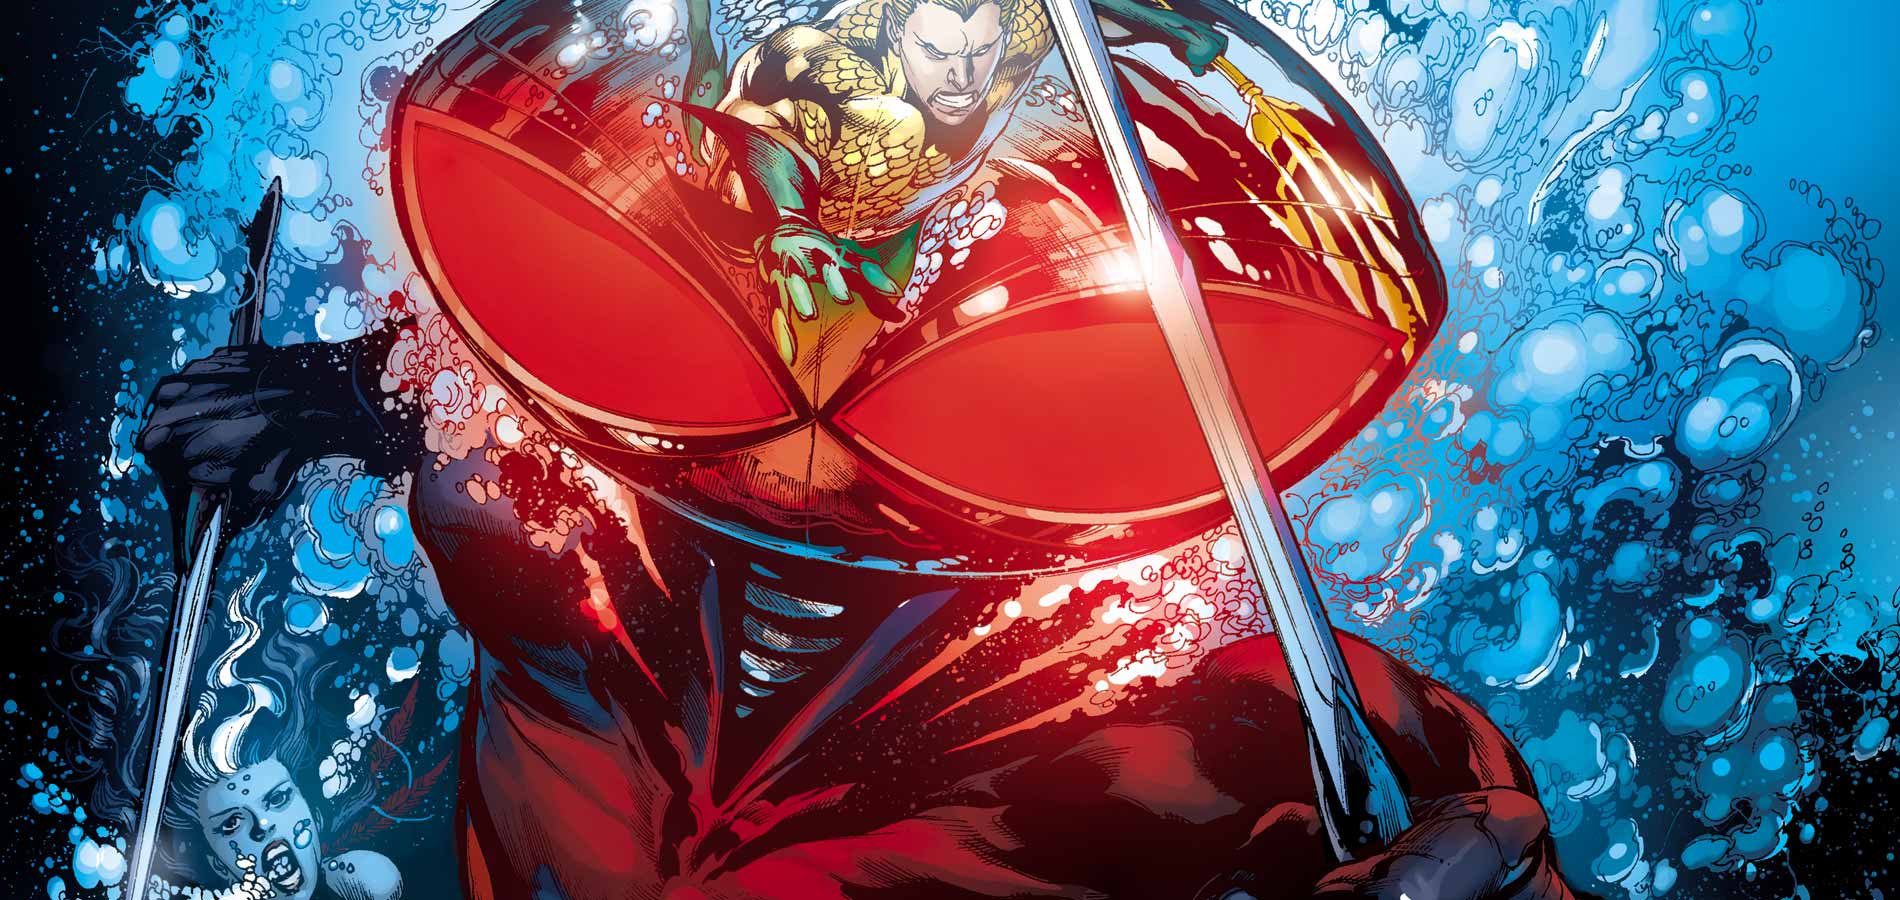 James Wan hints at a classic look for supervillain Black Manta in Aquaman. James Wan hints at a classic look for supervillain Black Manta in Aquaman